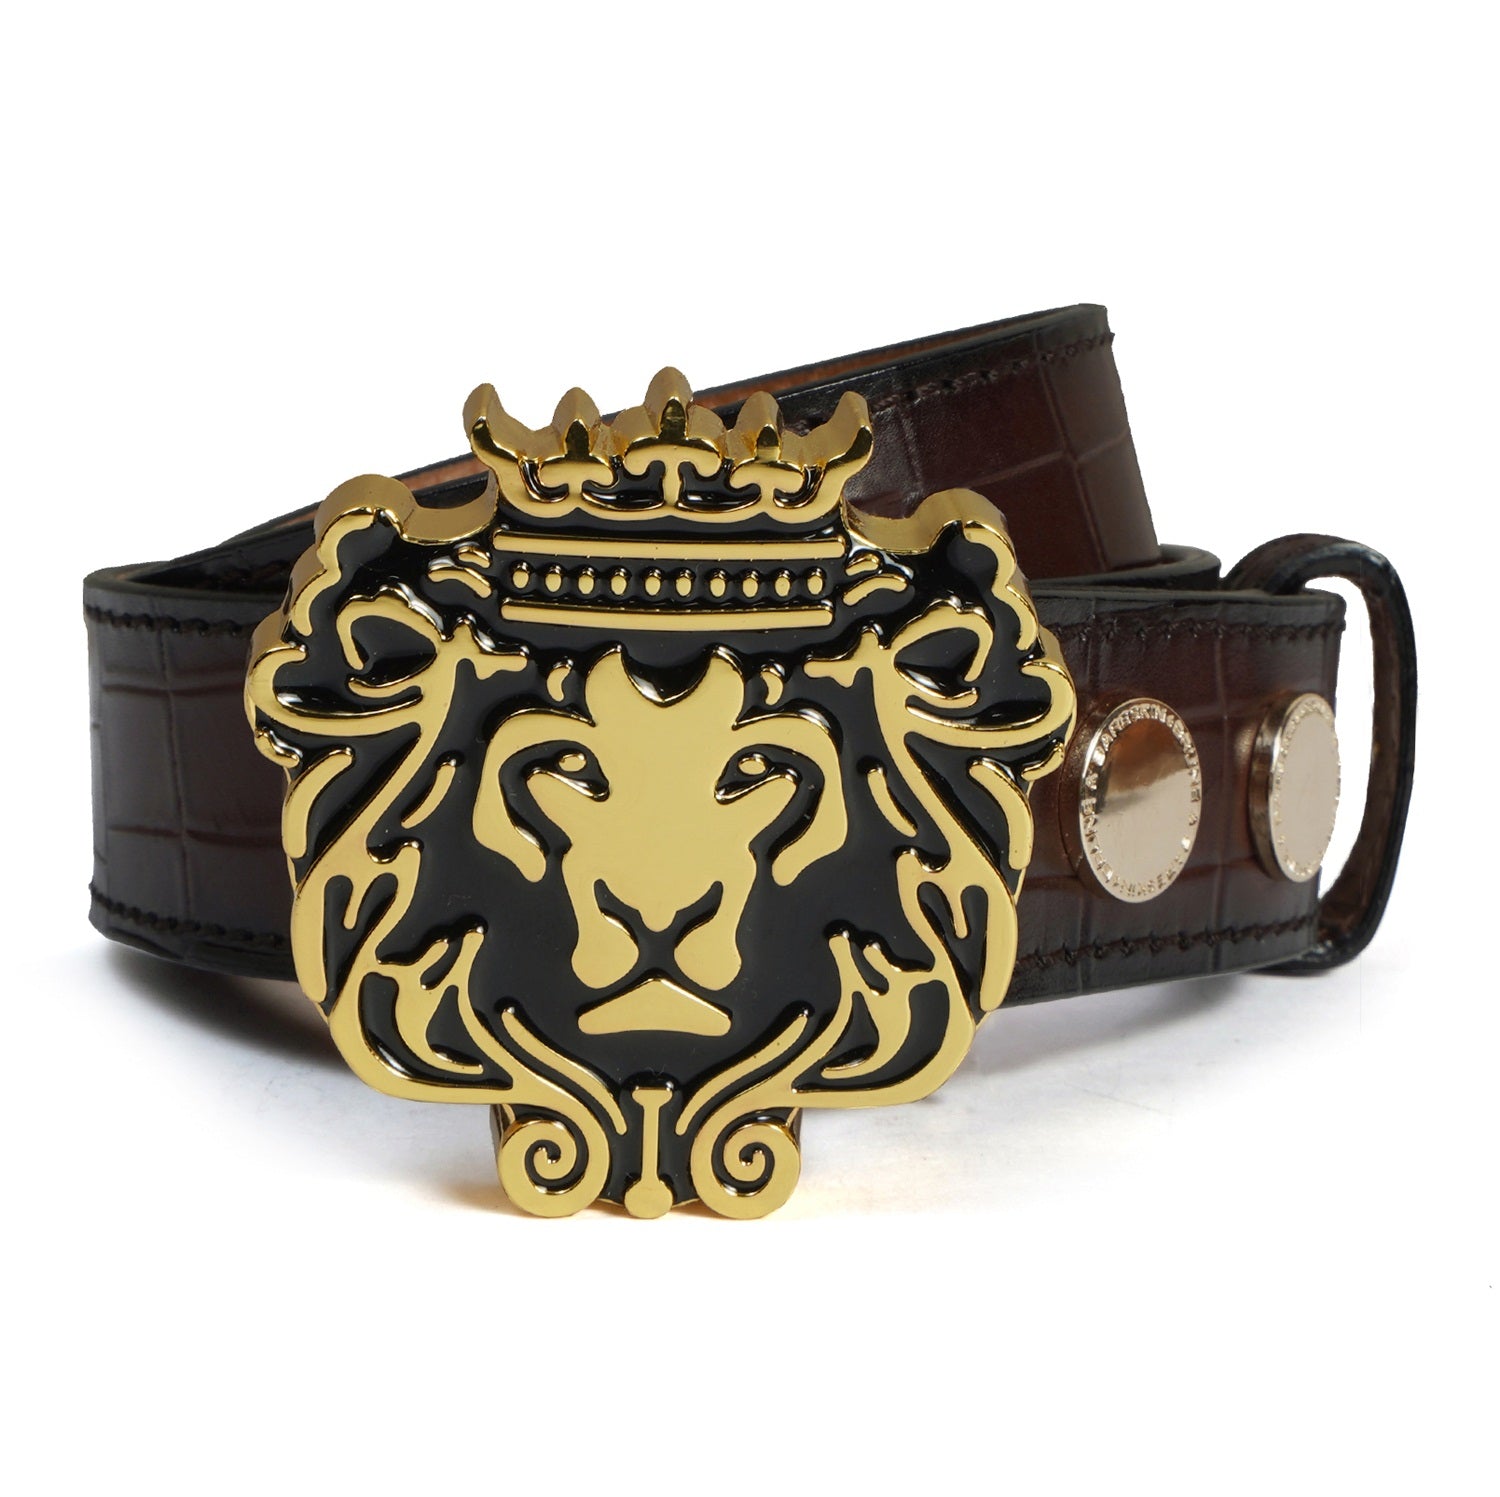 Men's Dark Brown Belt with Removable "Brune & Bareskin" Brand Lion Logo Buckle in Deep Cut Leather